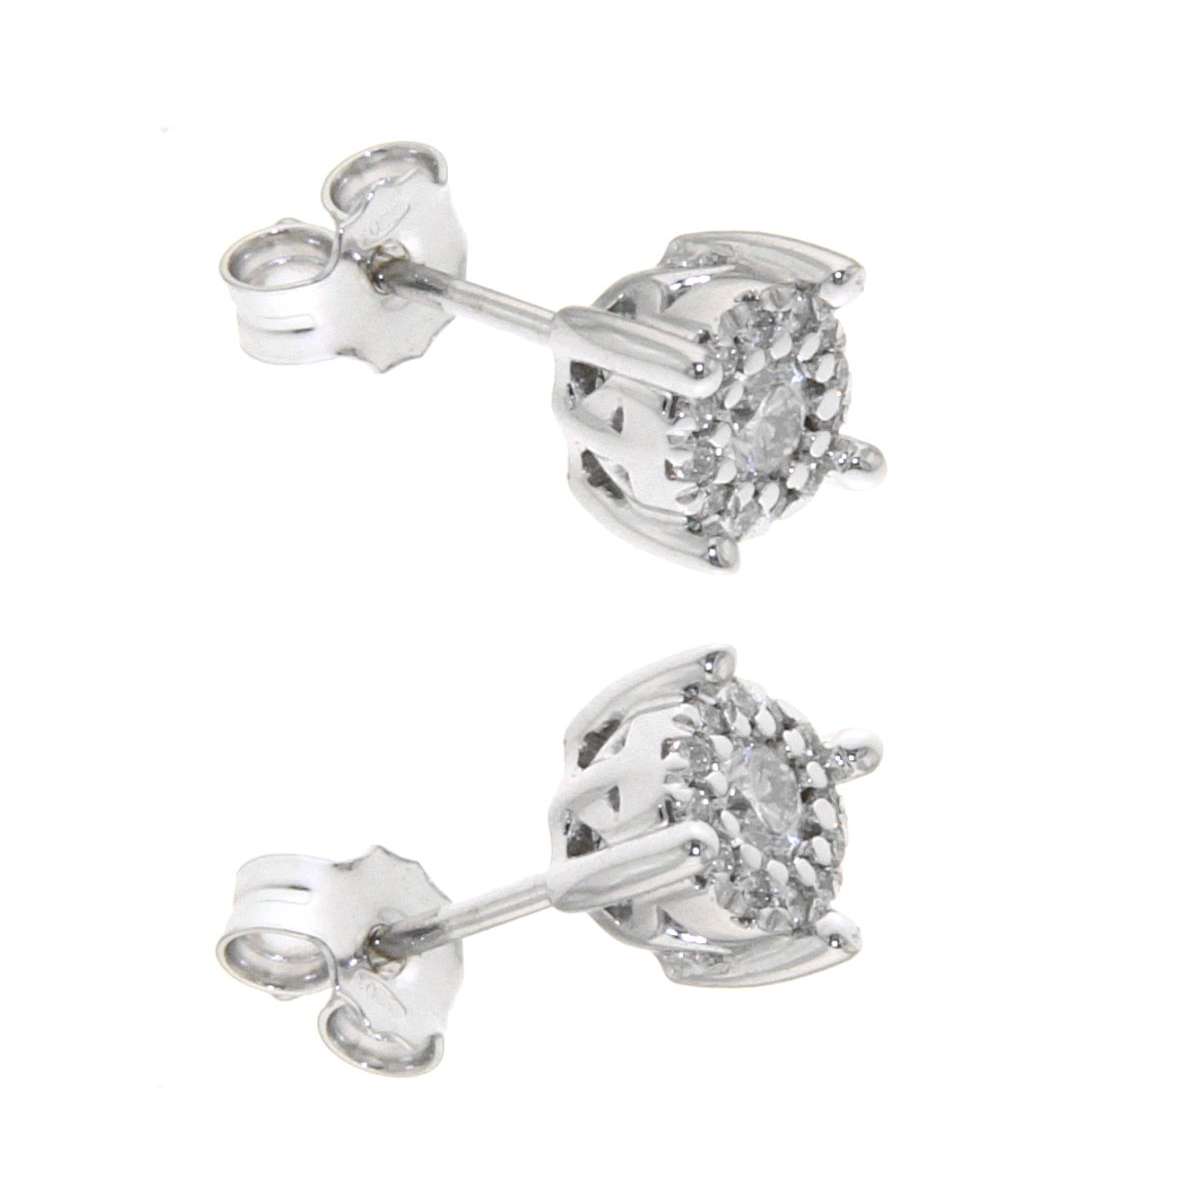 Solitaire earrings 0.32 carats diamonds G-VS1